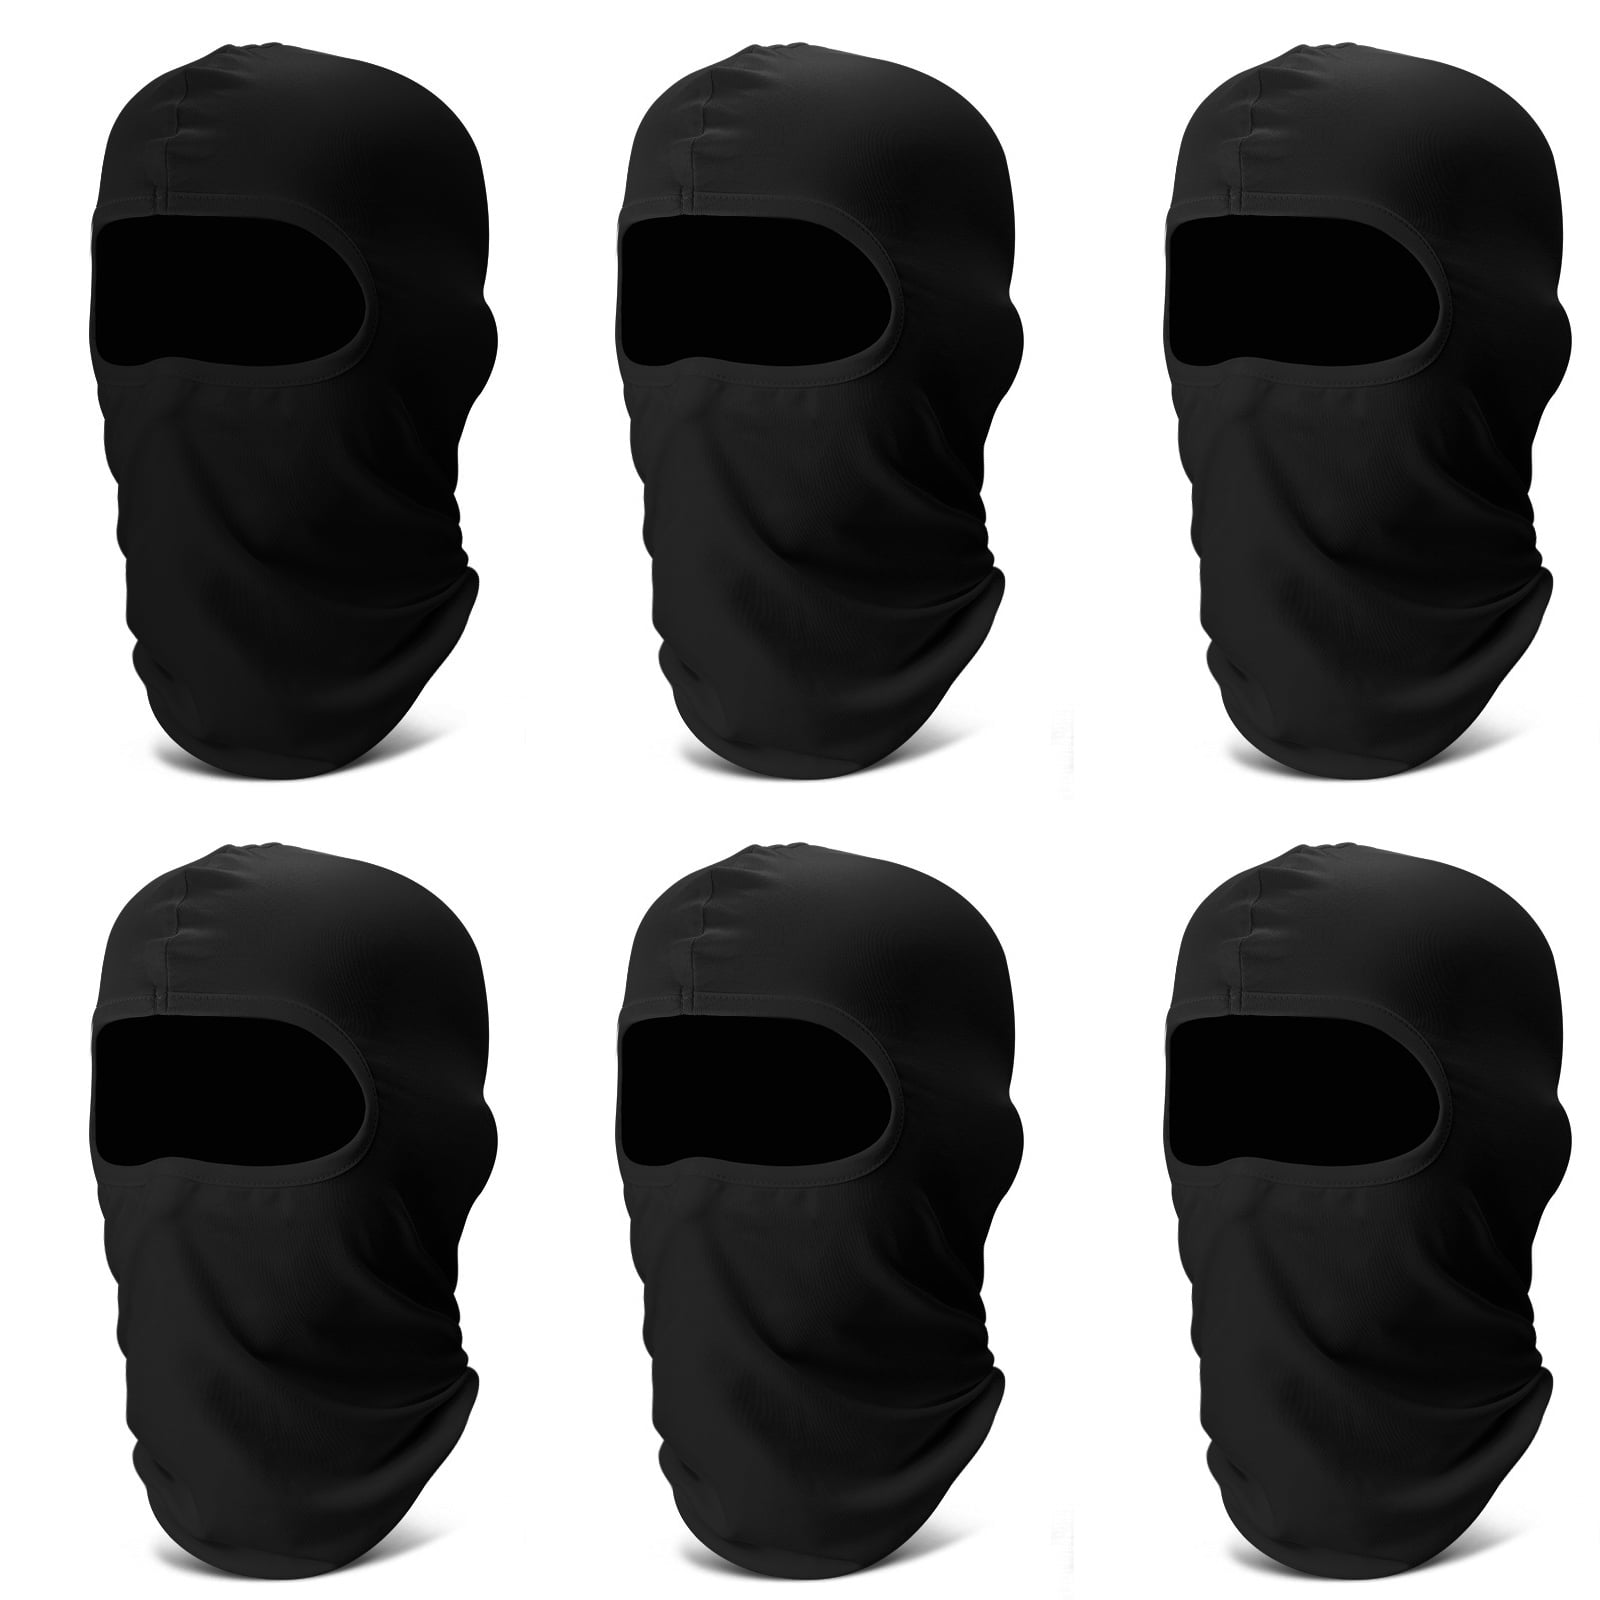 Finvizo 6 Pack Balaclava Ski Face Mask: Cooling Neck Gaiter Full Head Mask Face Cover